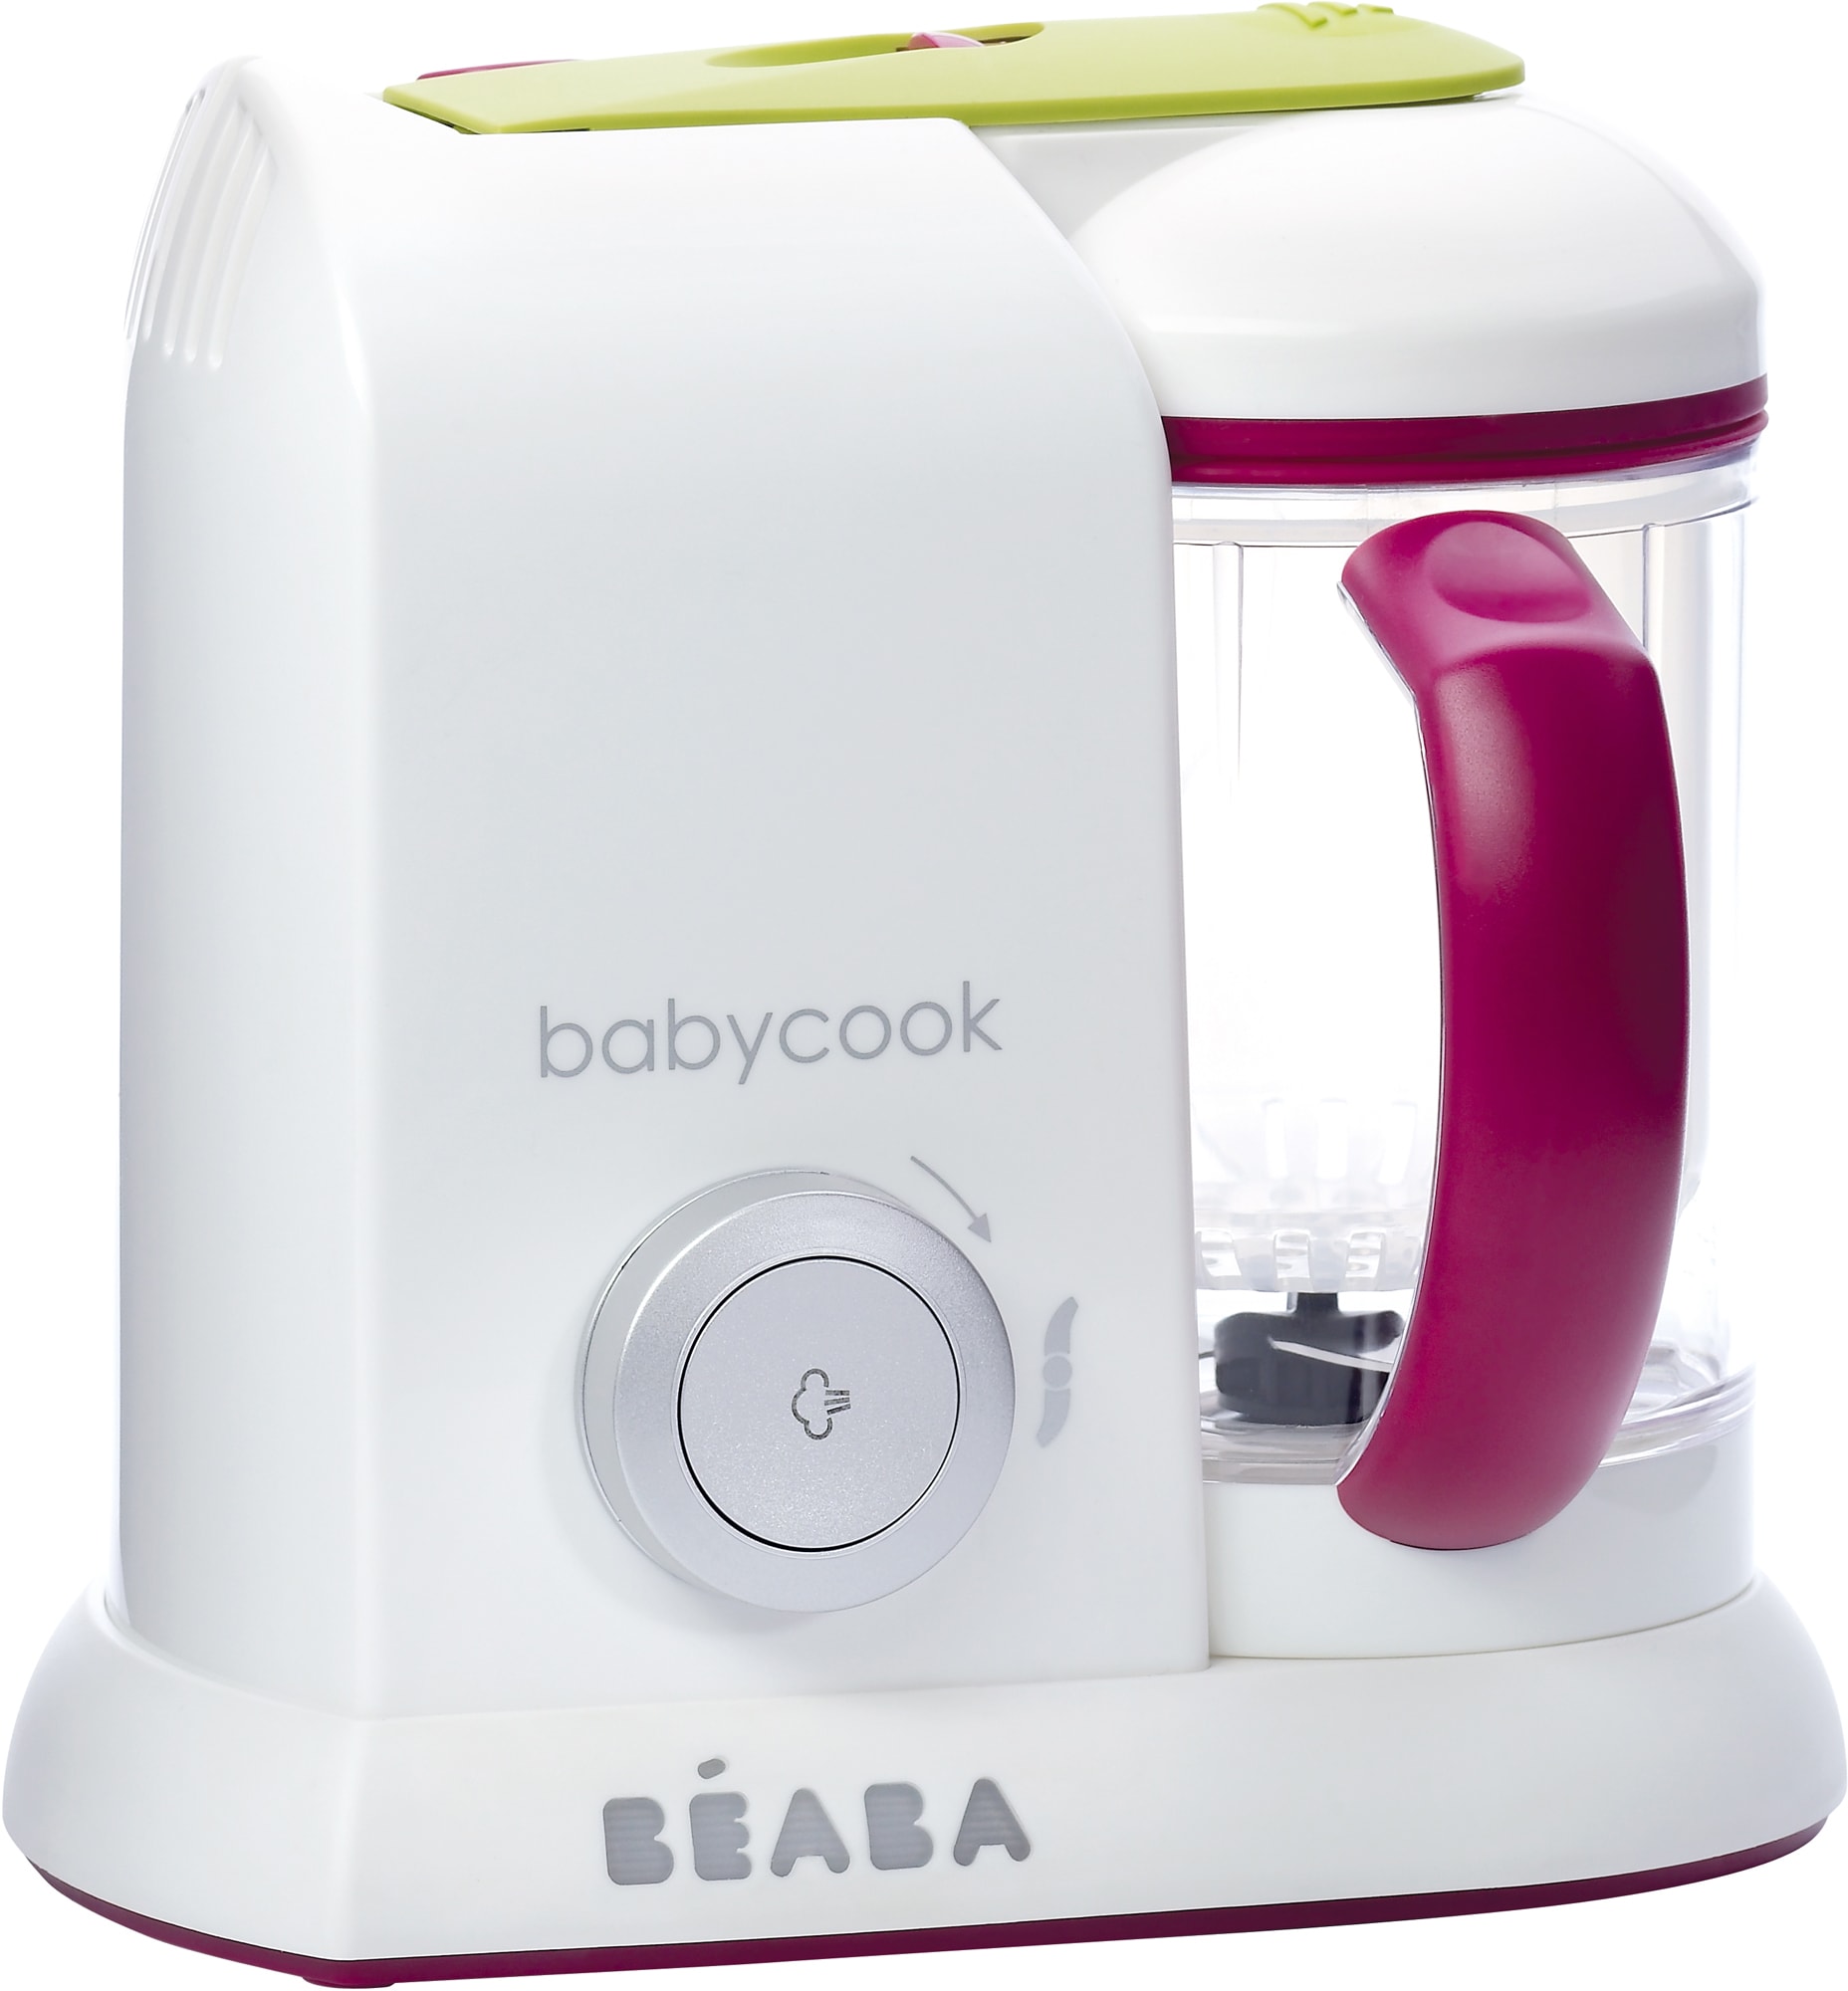 Robot bébé cuiseur babycook express Beaba gris